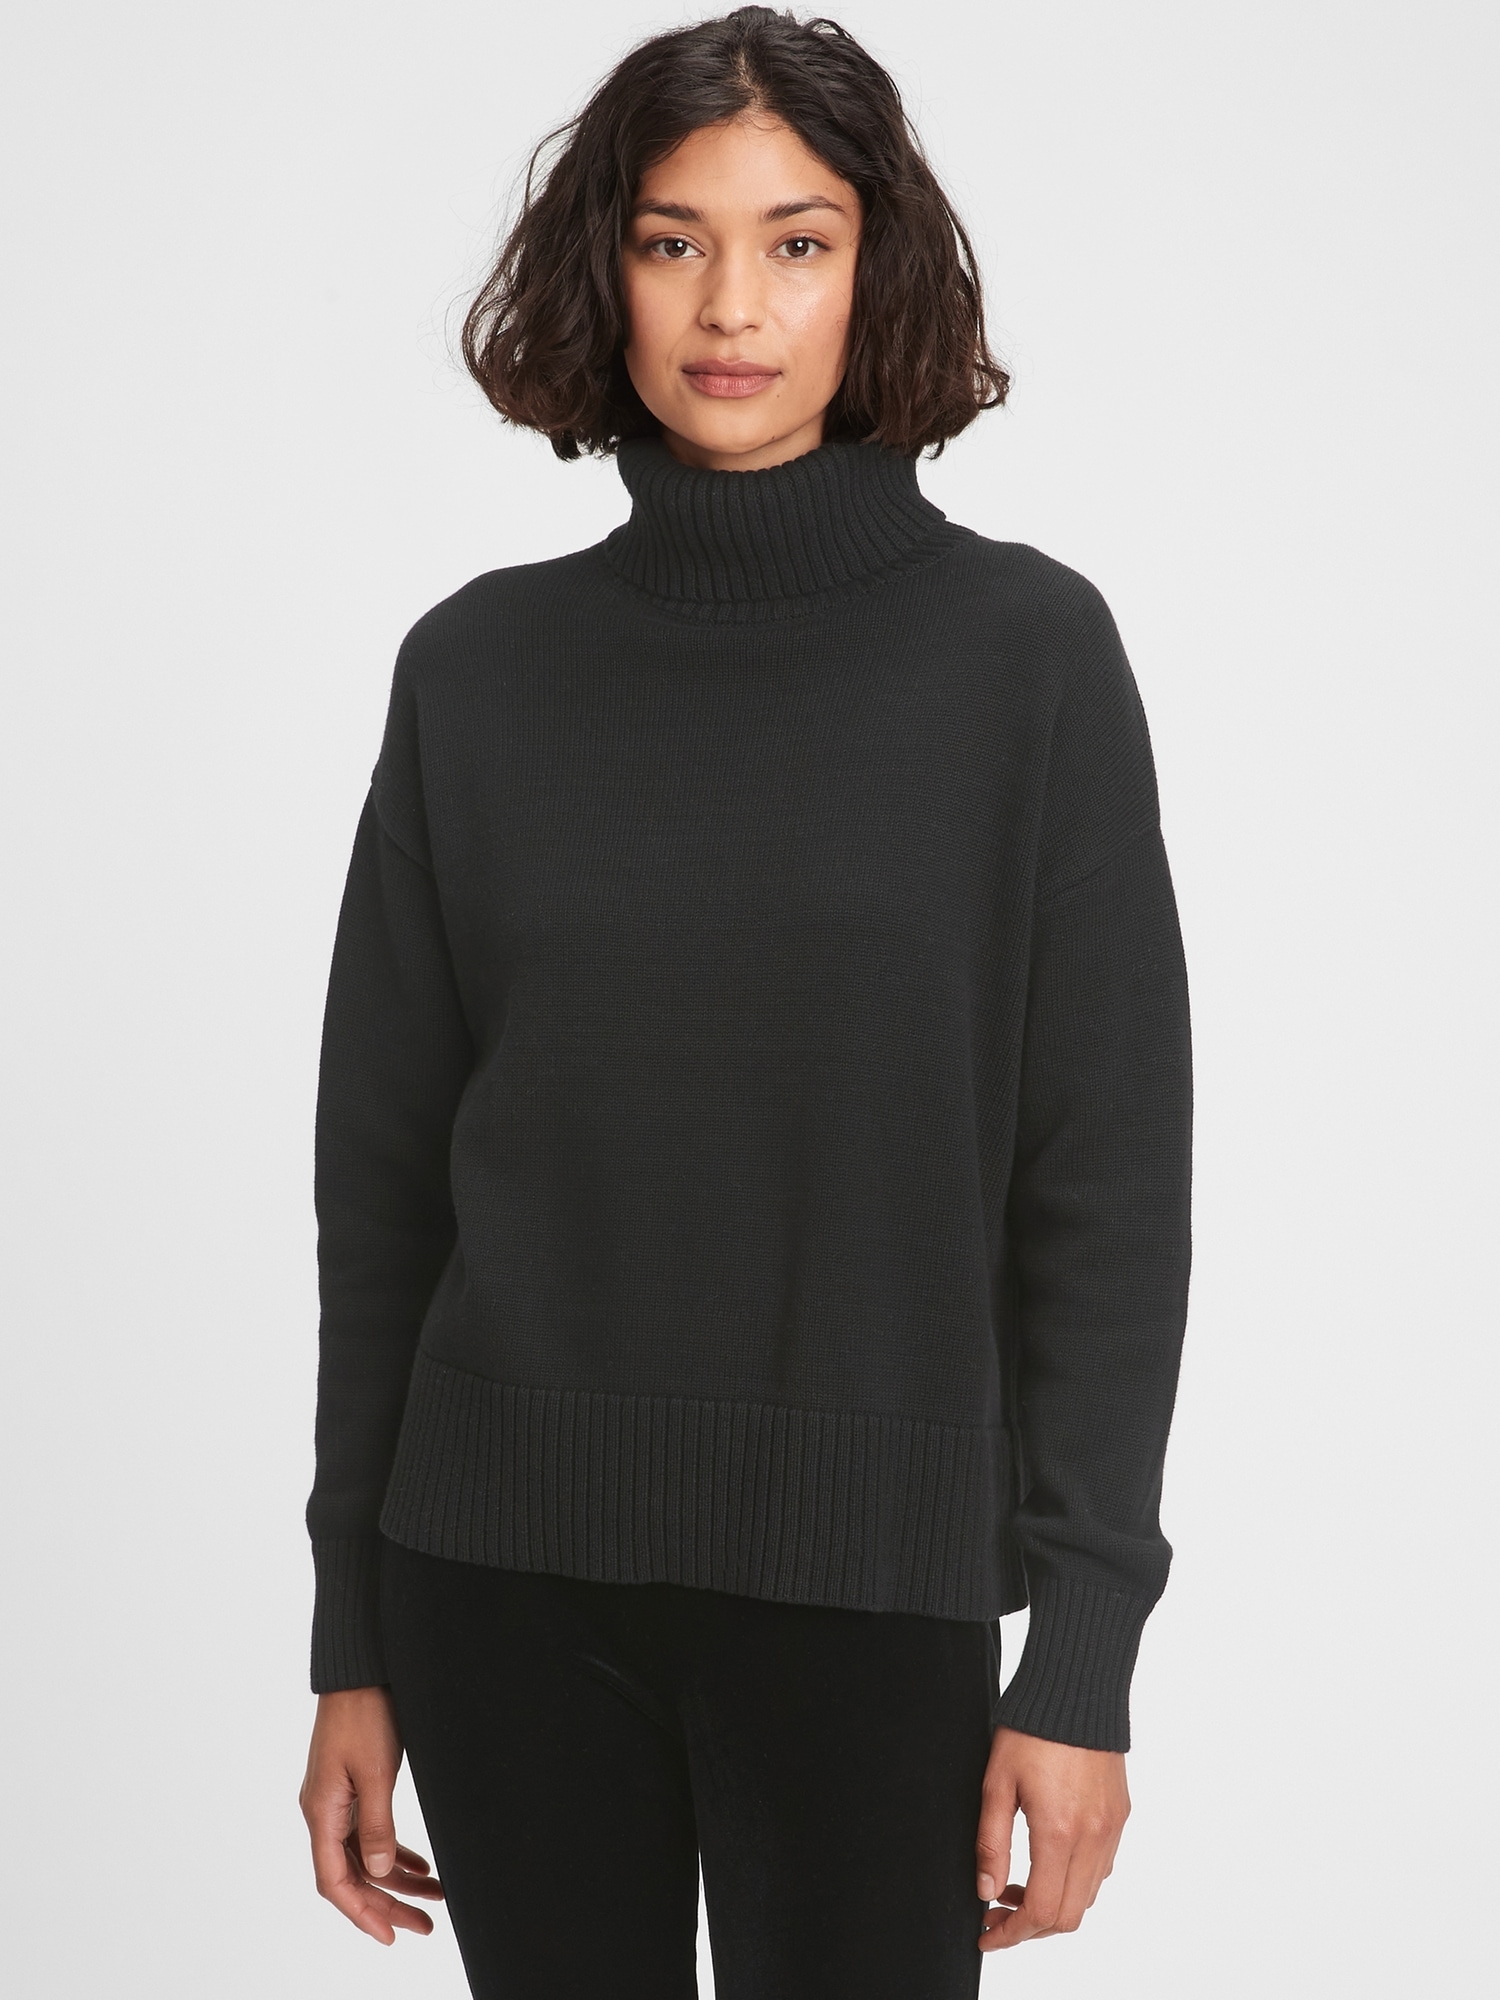 Oversized Cropped Turtleneck Sweater | Gap Factory